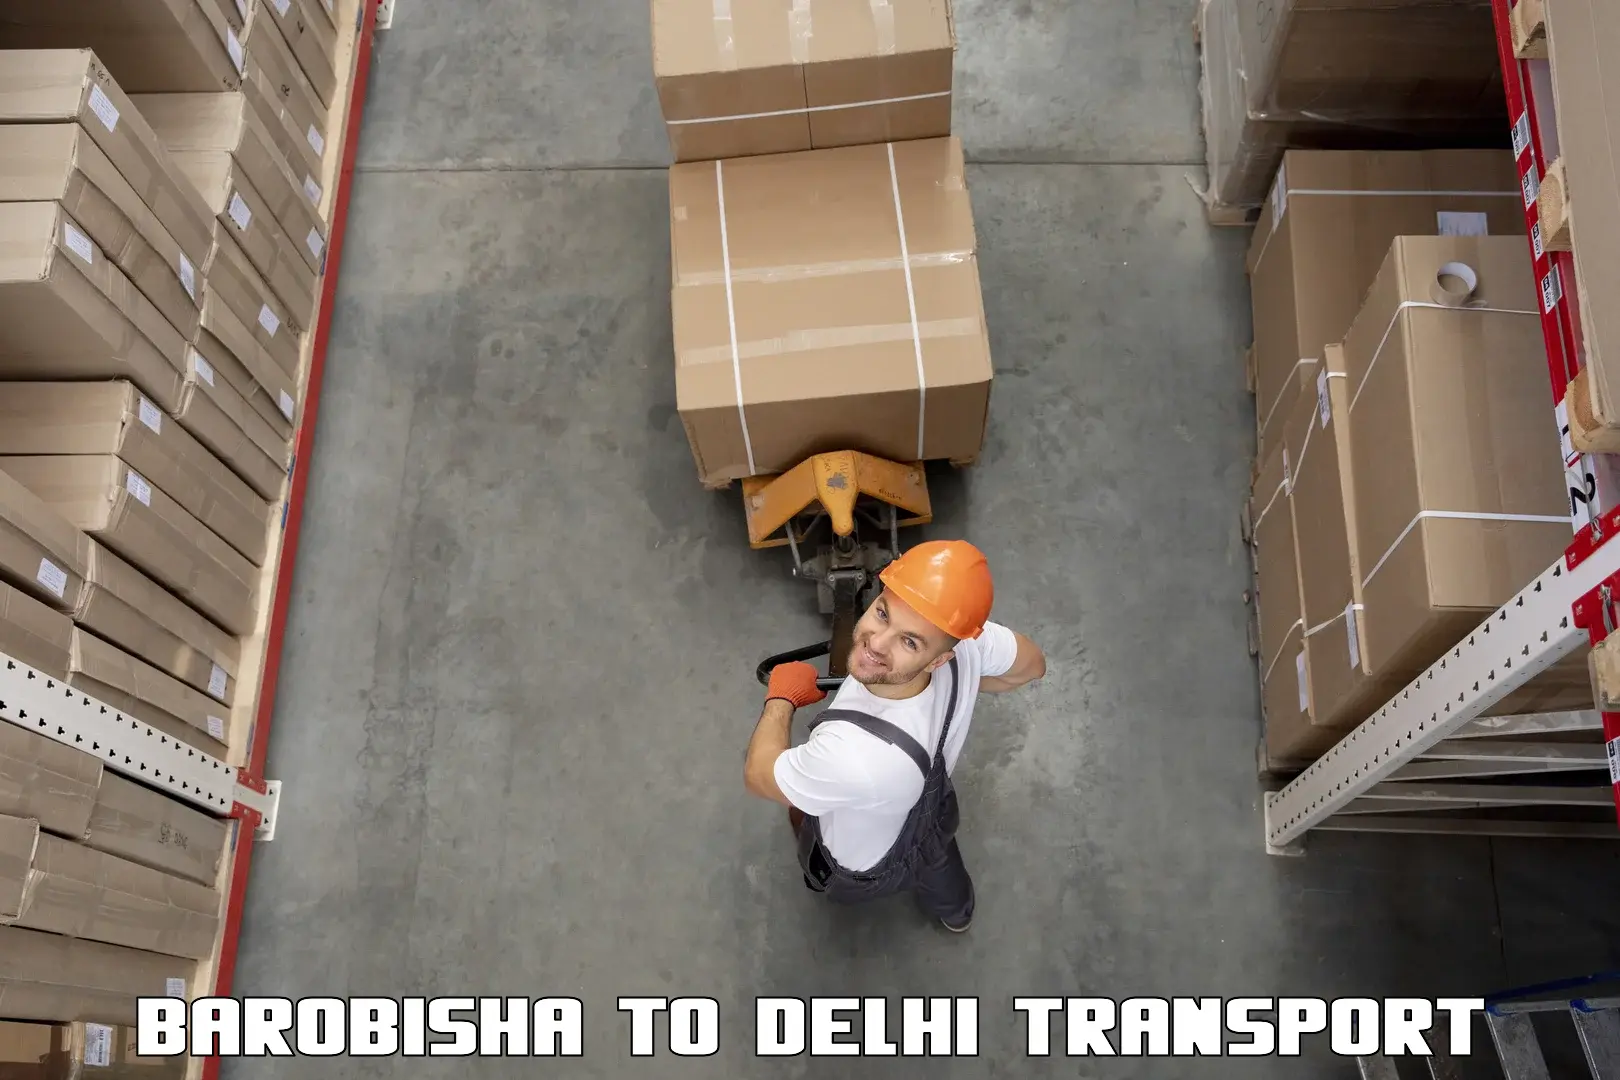 Daily transport service Barobisha to East Delhi